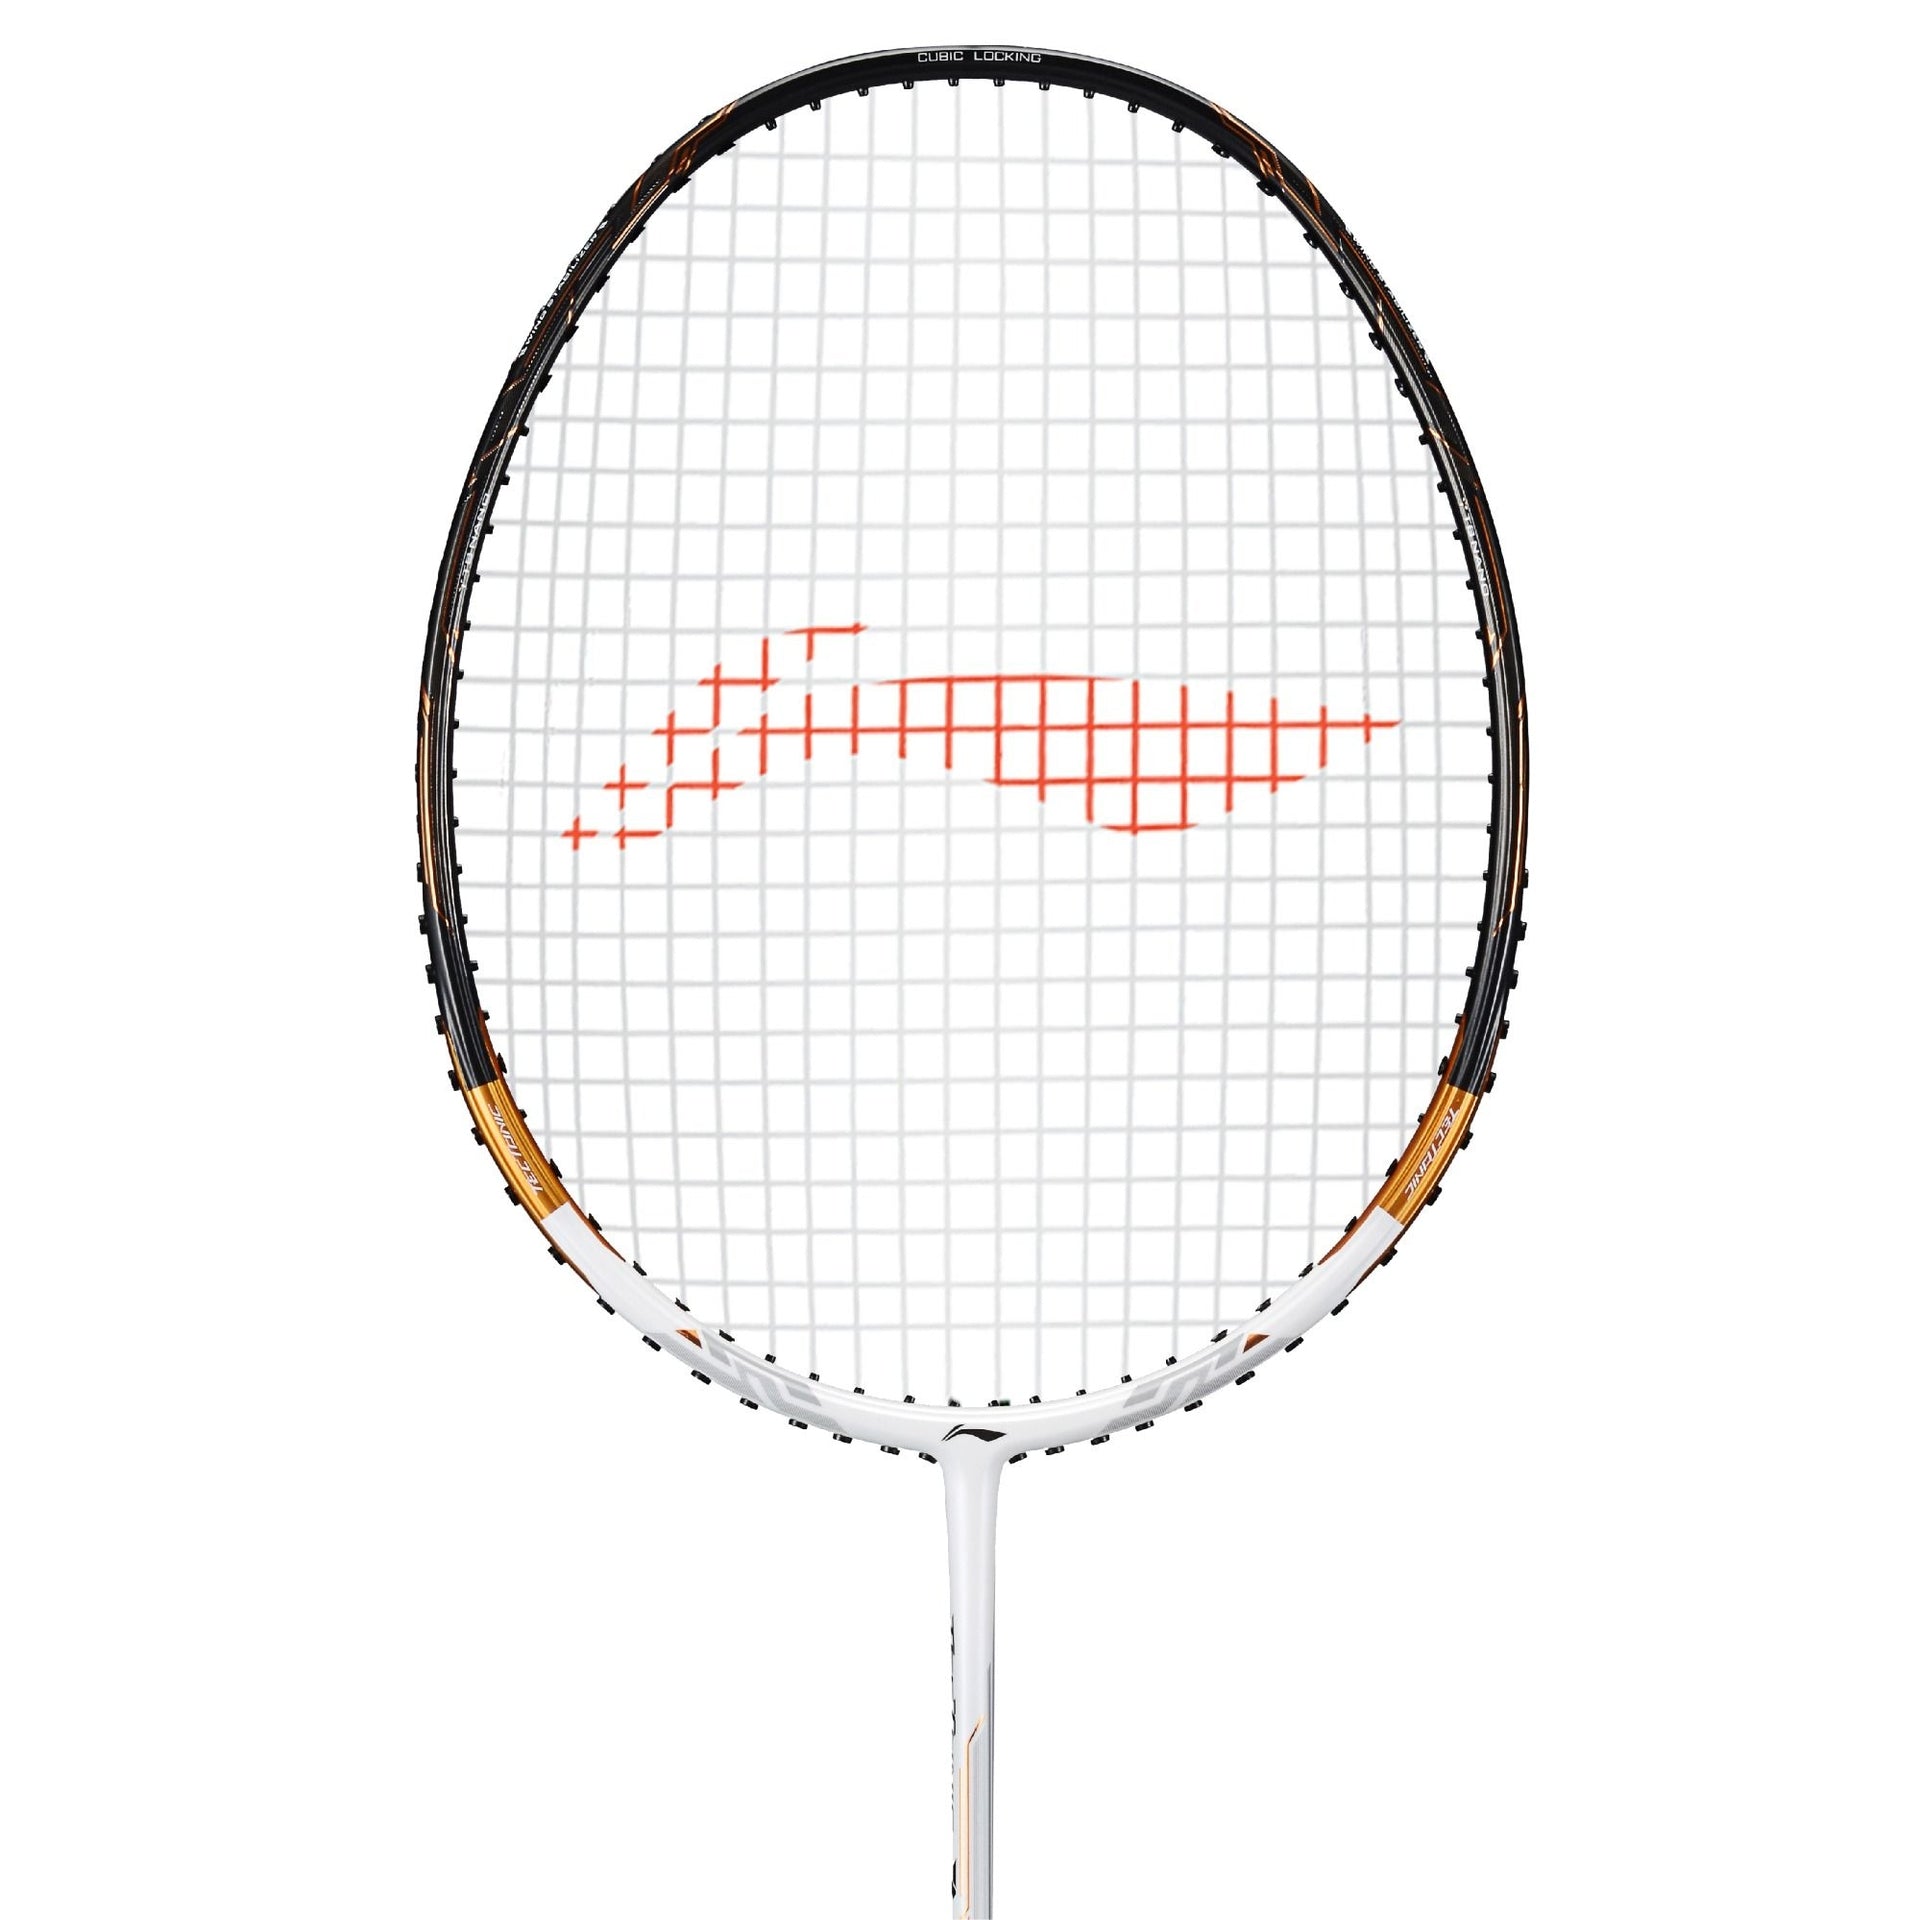 LI-NING Tectonic 7 Badminton Racket | Power and Control